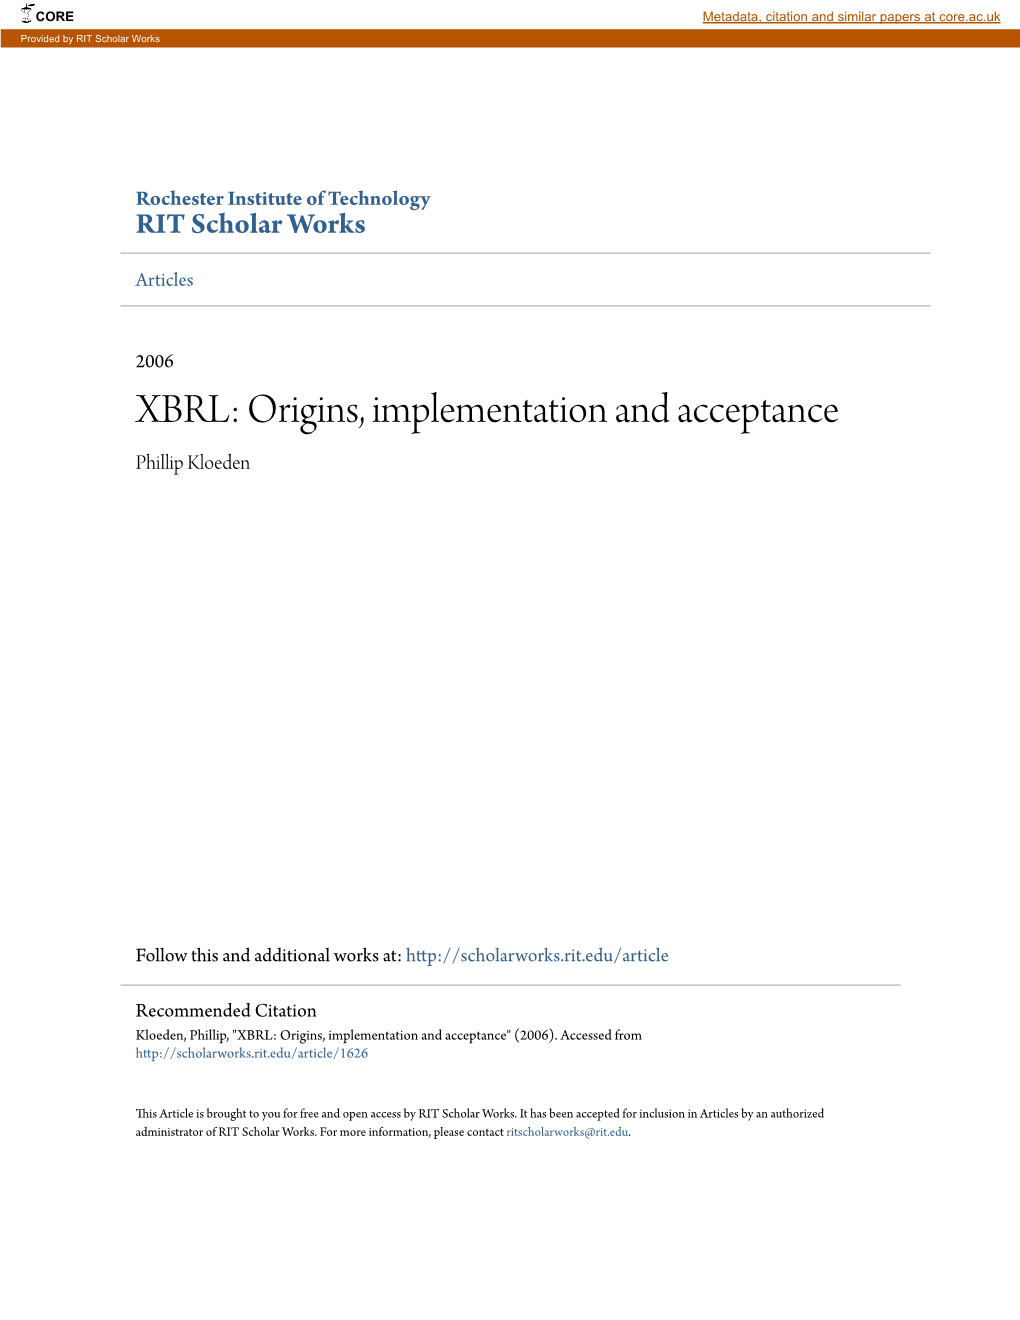 XBRL: Origins, Implementation and Acceptance Phillip Kloeden